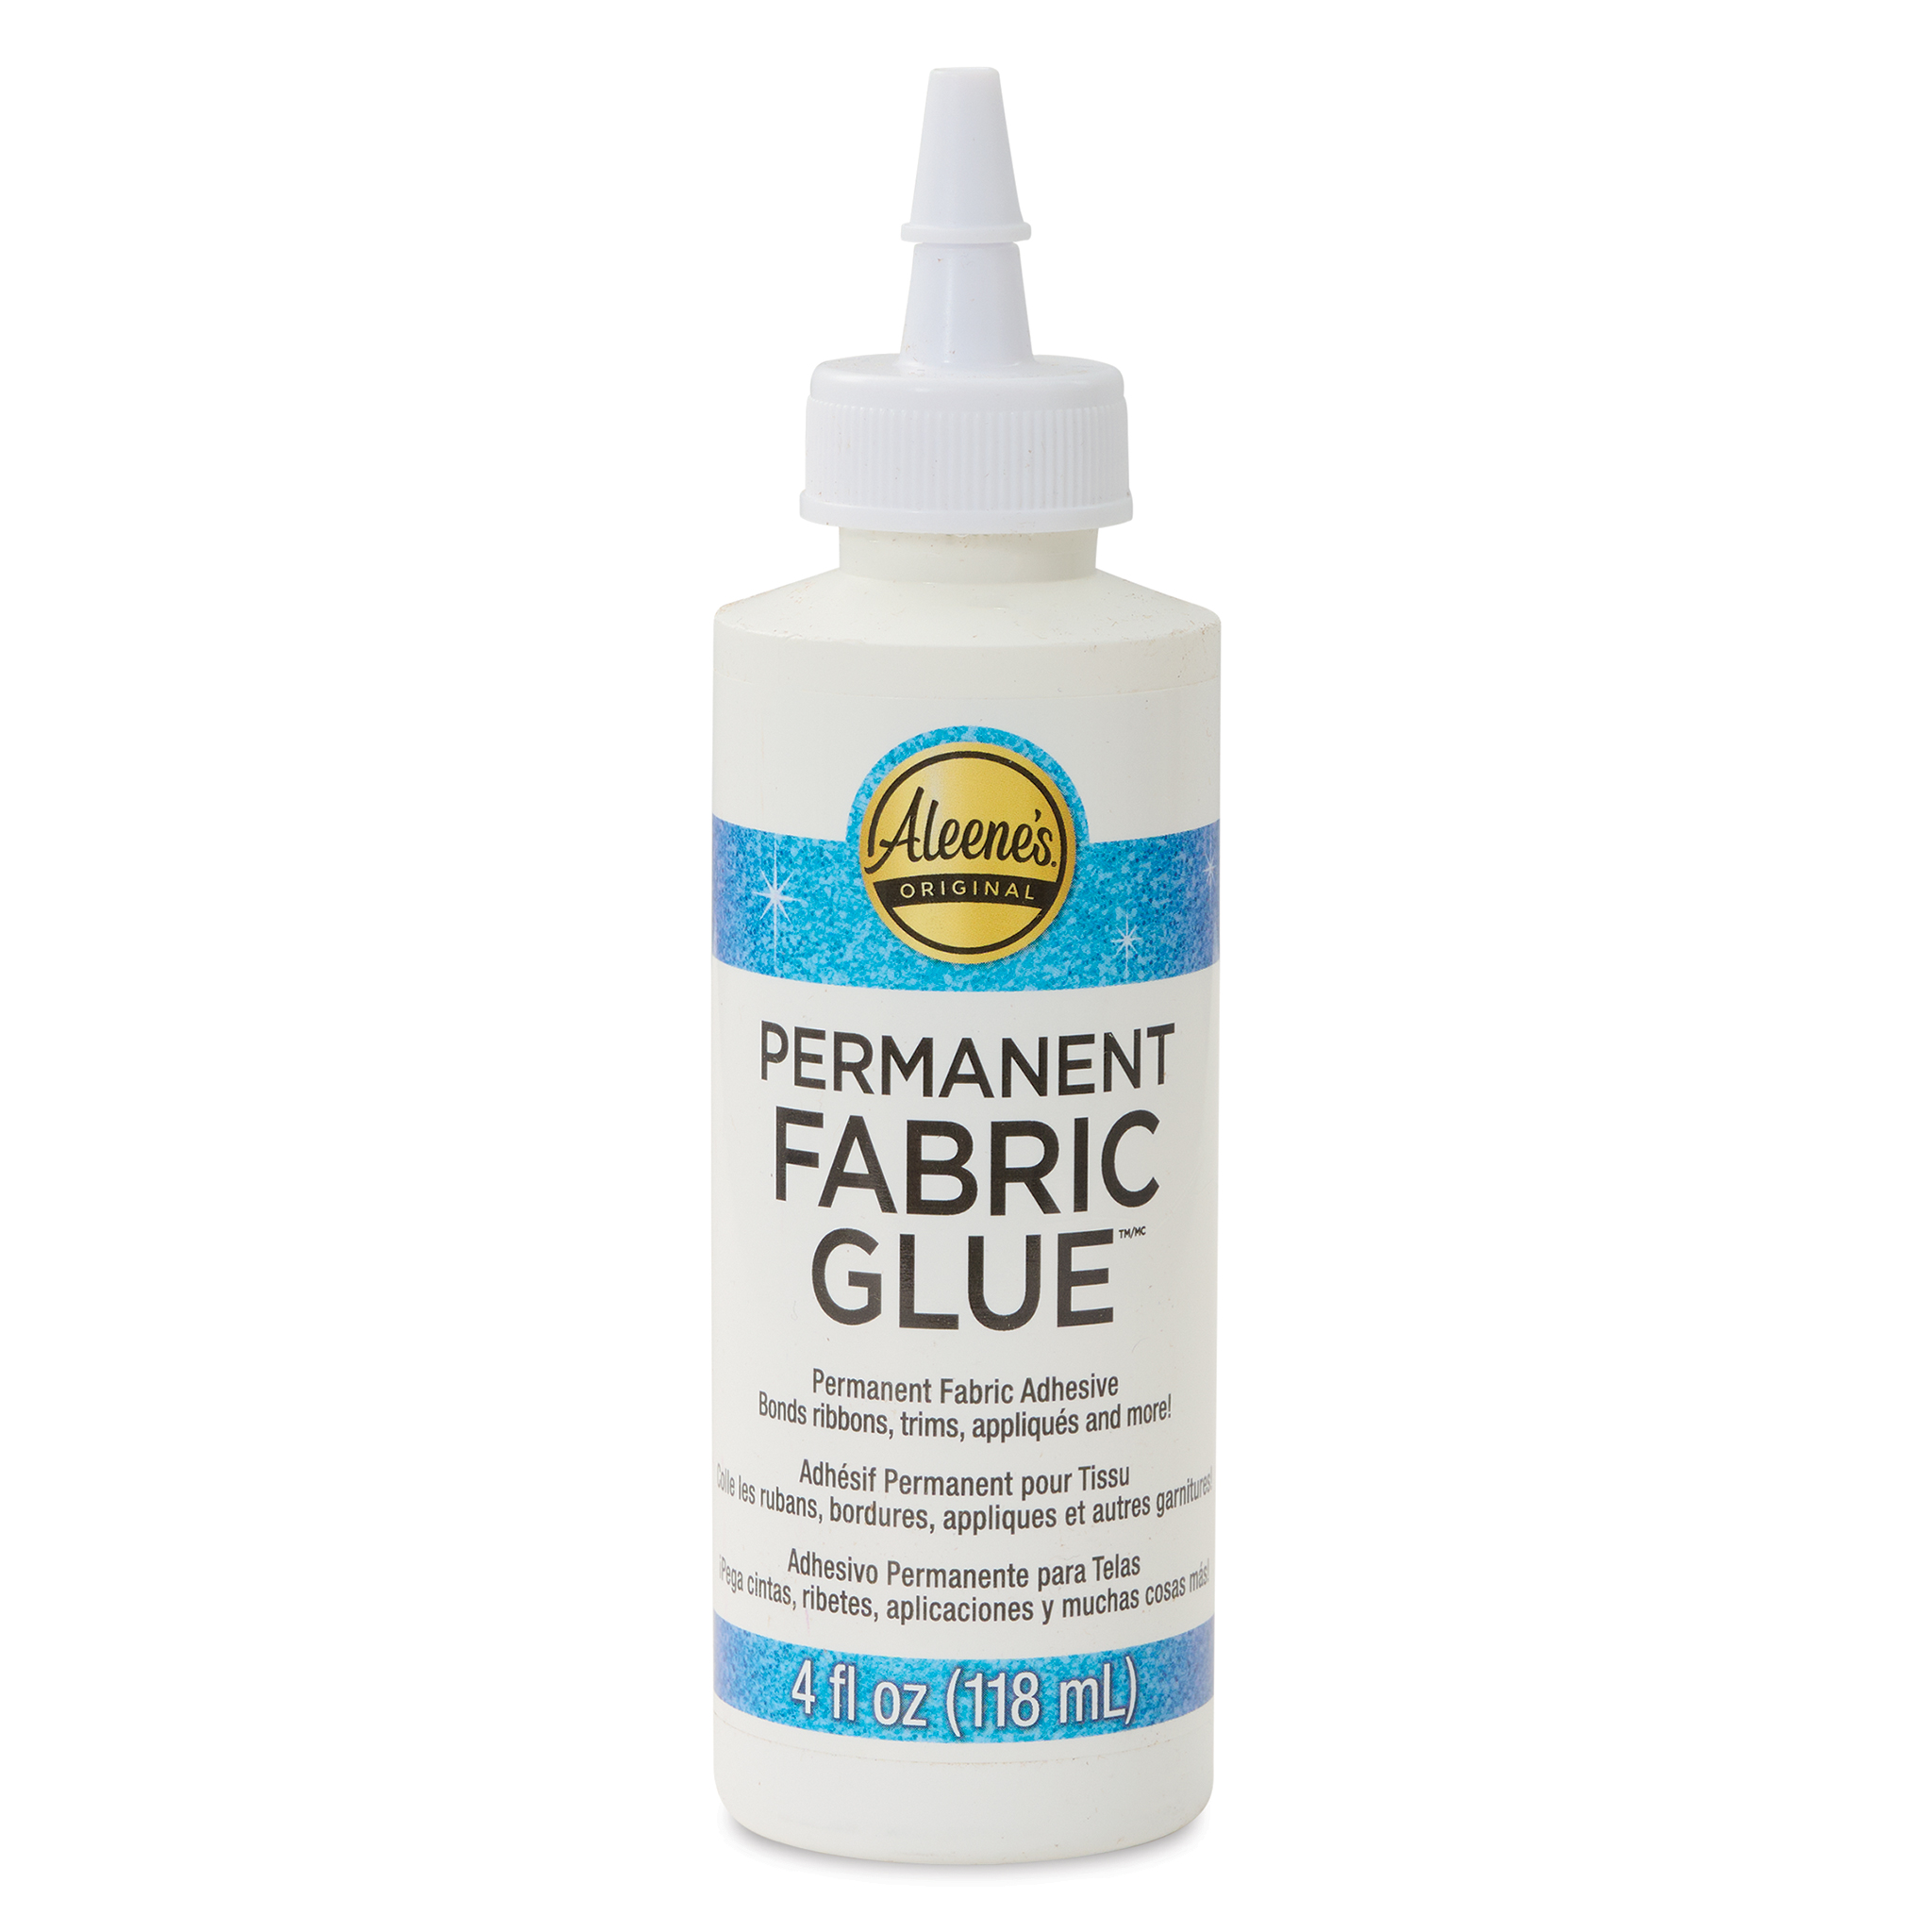 SOBO Premium Fabric Glue (new)